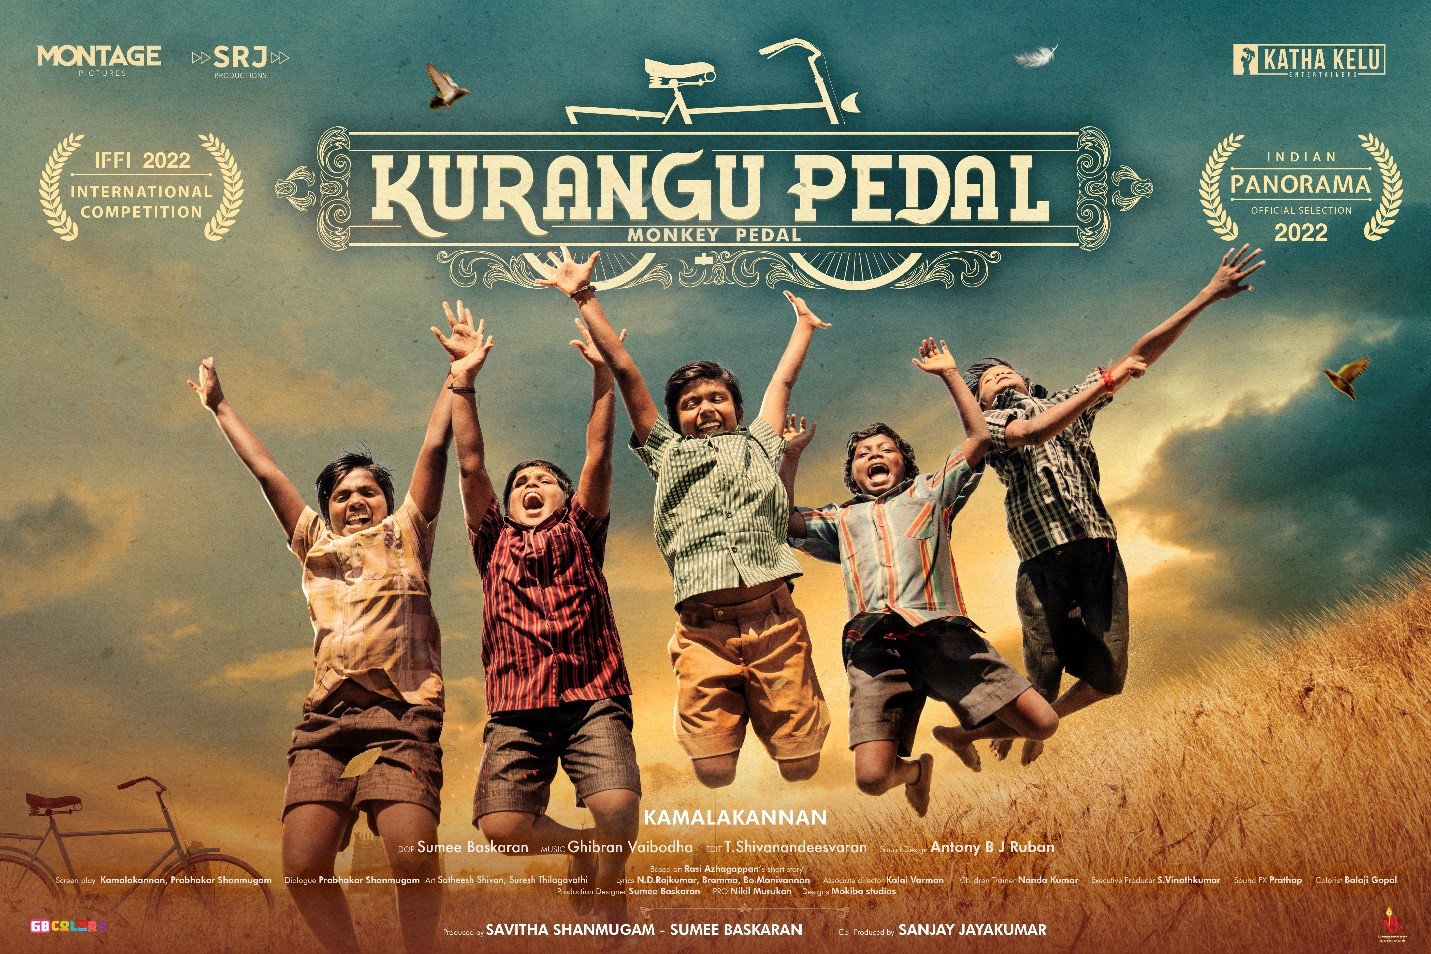 'Kurangu Pedal' captures a generation's emotional connect with bicycle  'Kurangu Pedal' captures innocence of childhood and emotions between a  father-son duo: Kamalakannan, Director